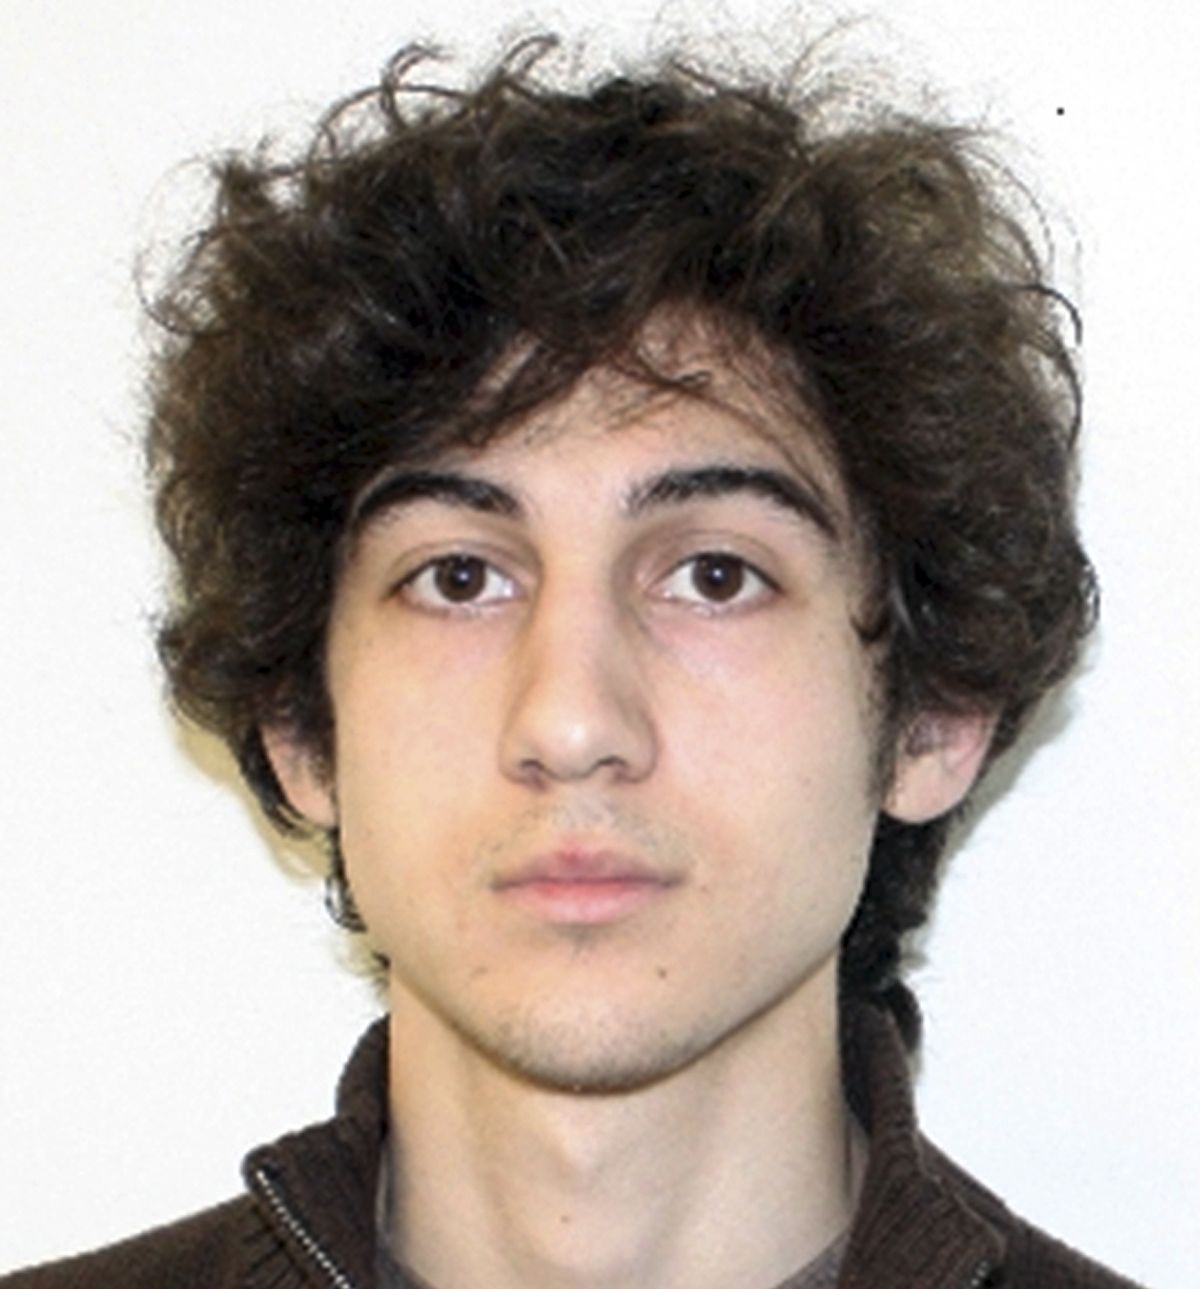 Boston Marathon bombing suspect Dzhokhar Tsarnaev was found hiding in a boat in a backyard.